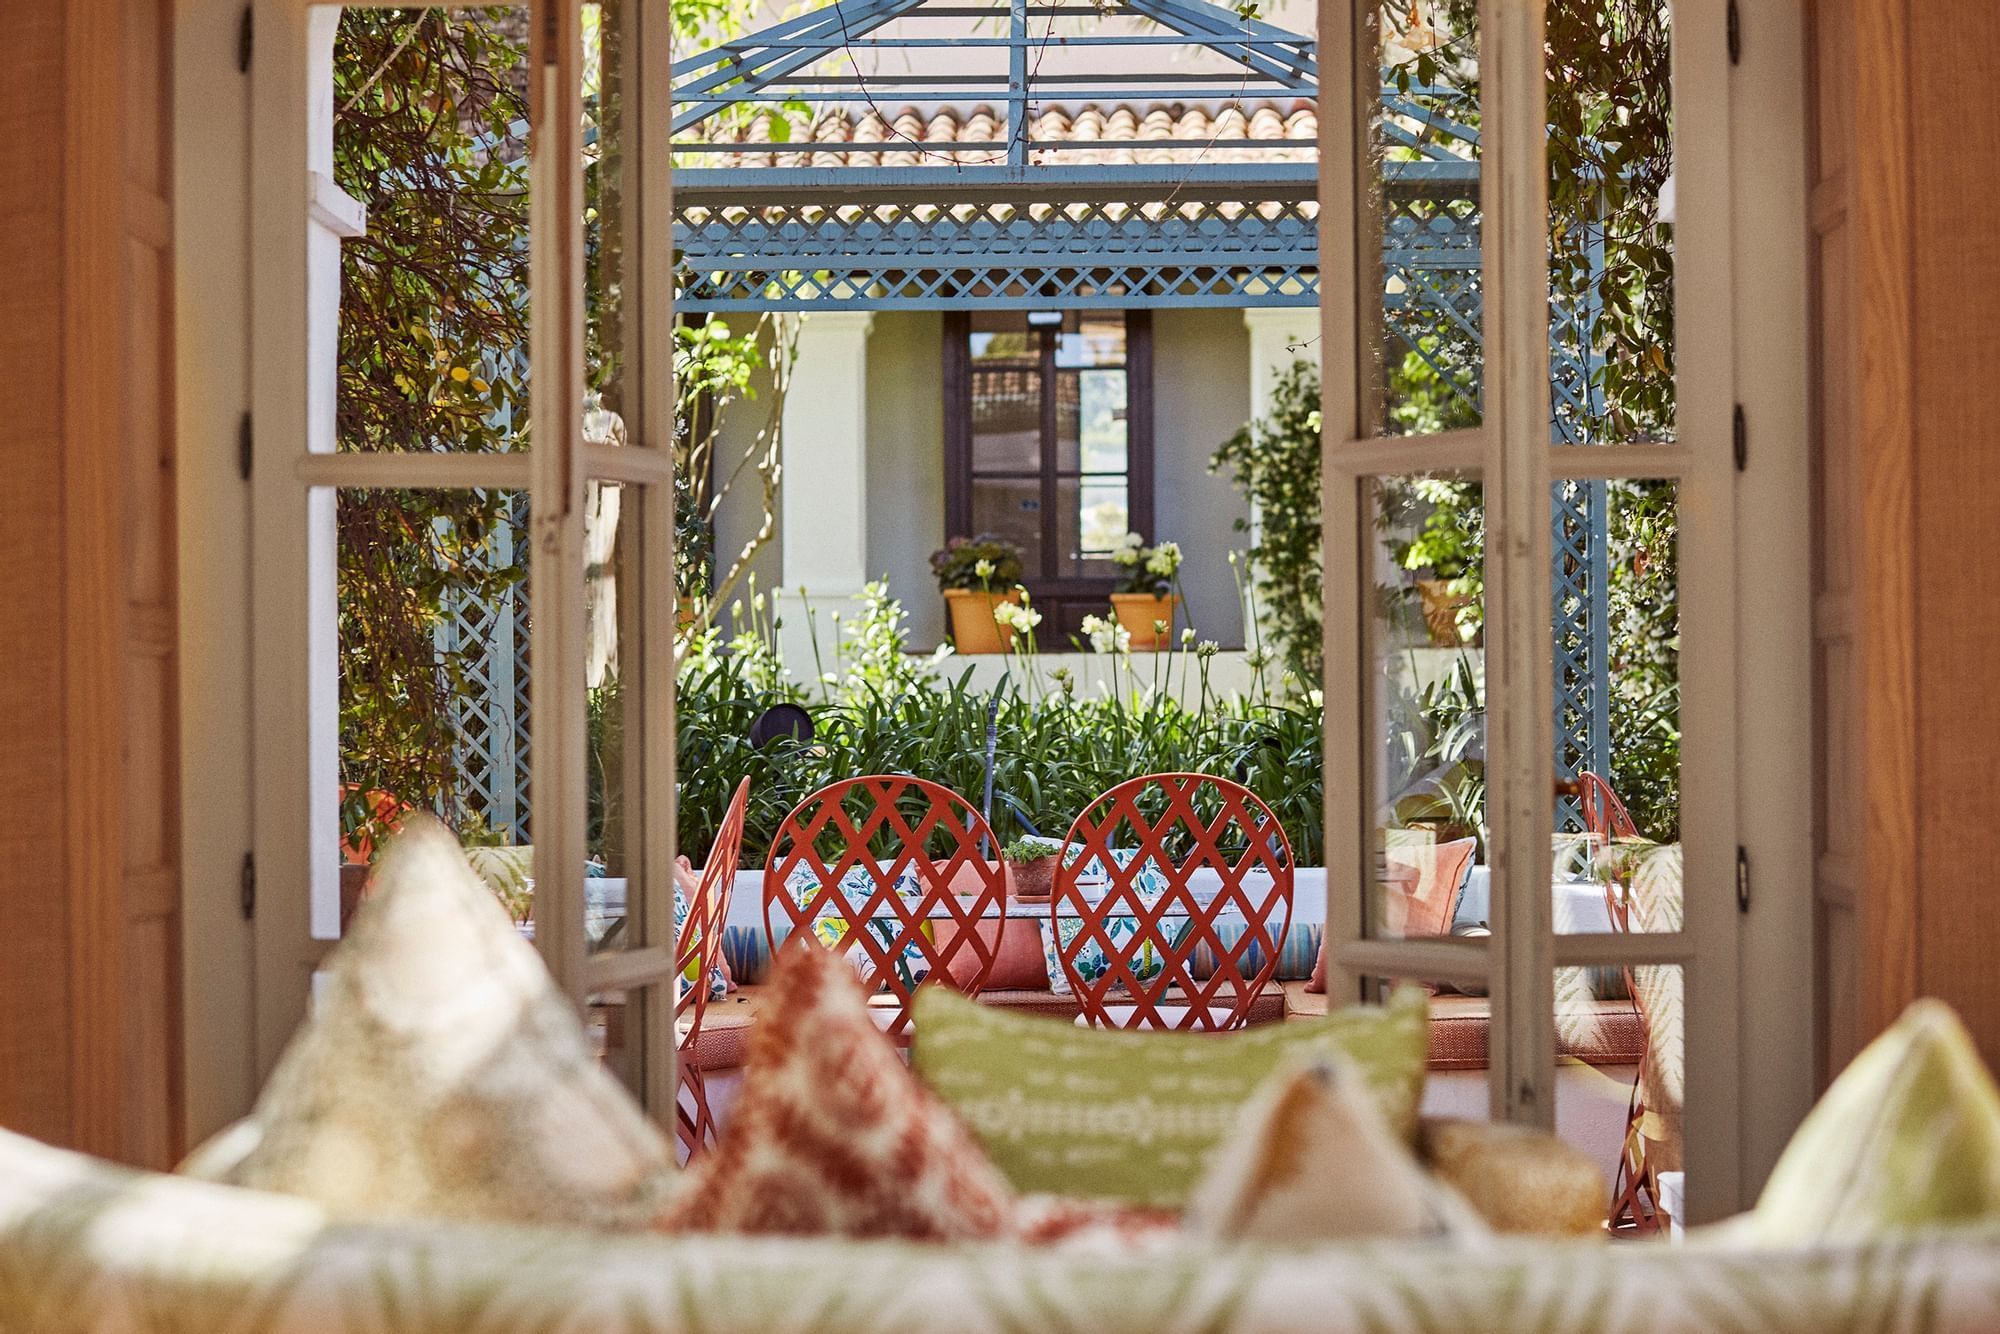 The terrace of El Patio restaurant at the Marbella Club